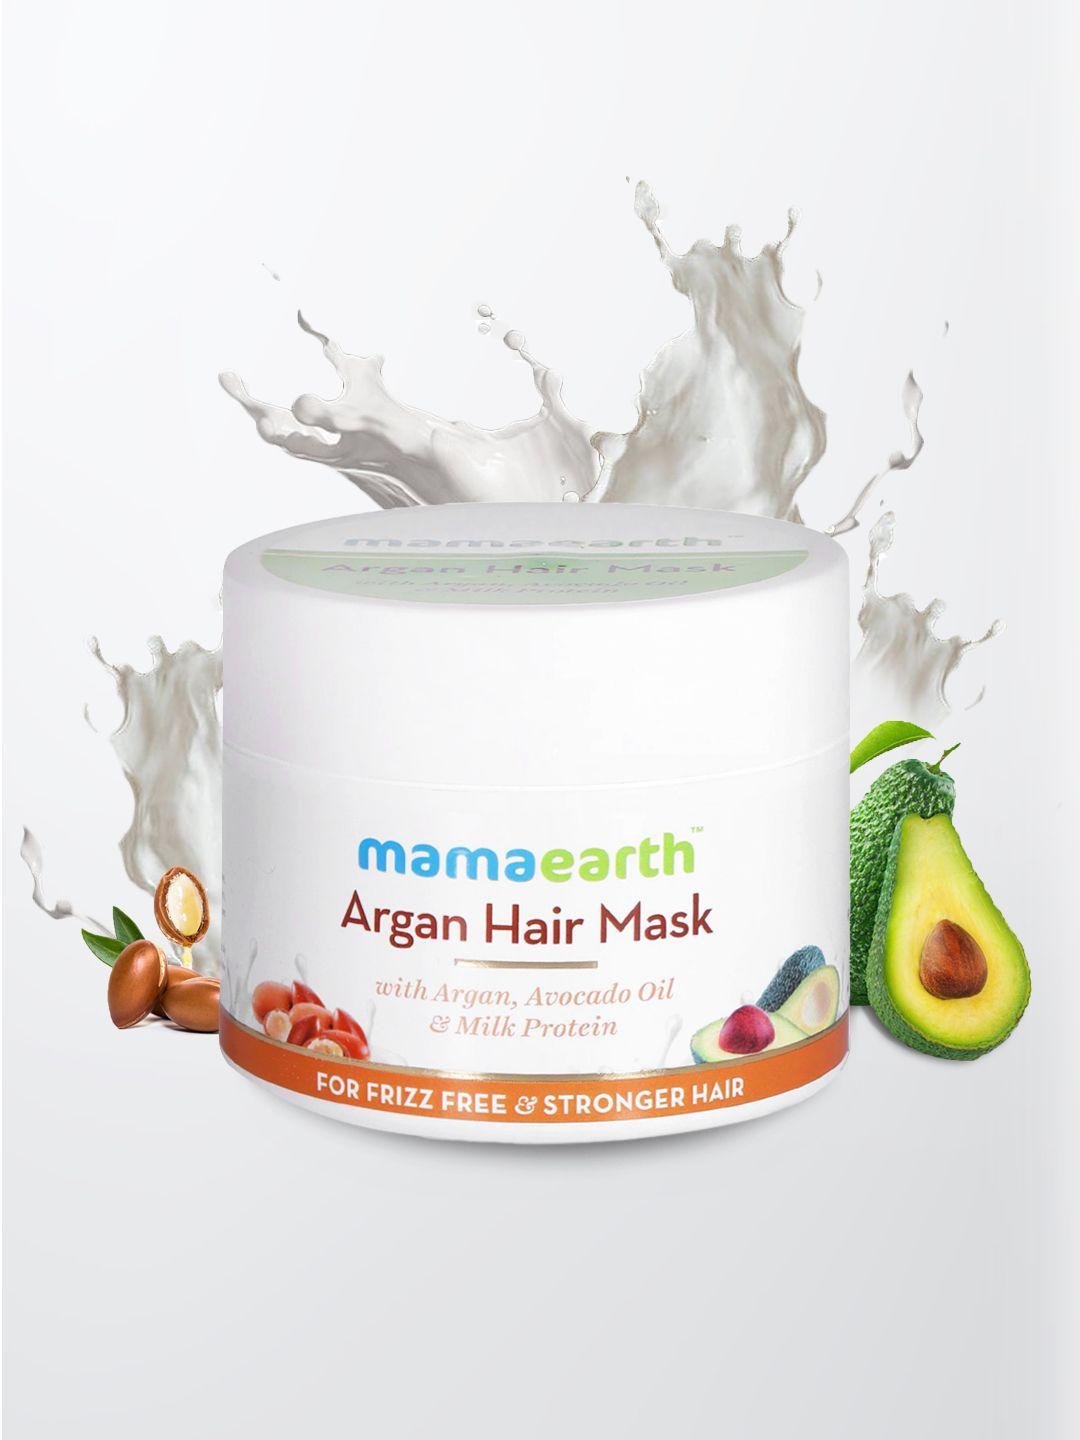 mamaearth sustainable argan oil hair mask with avocado oil & milk protein 200ml